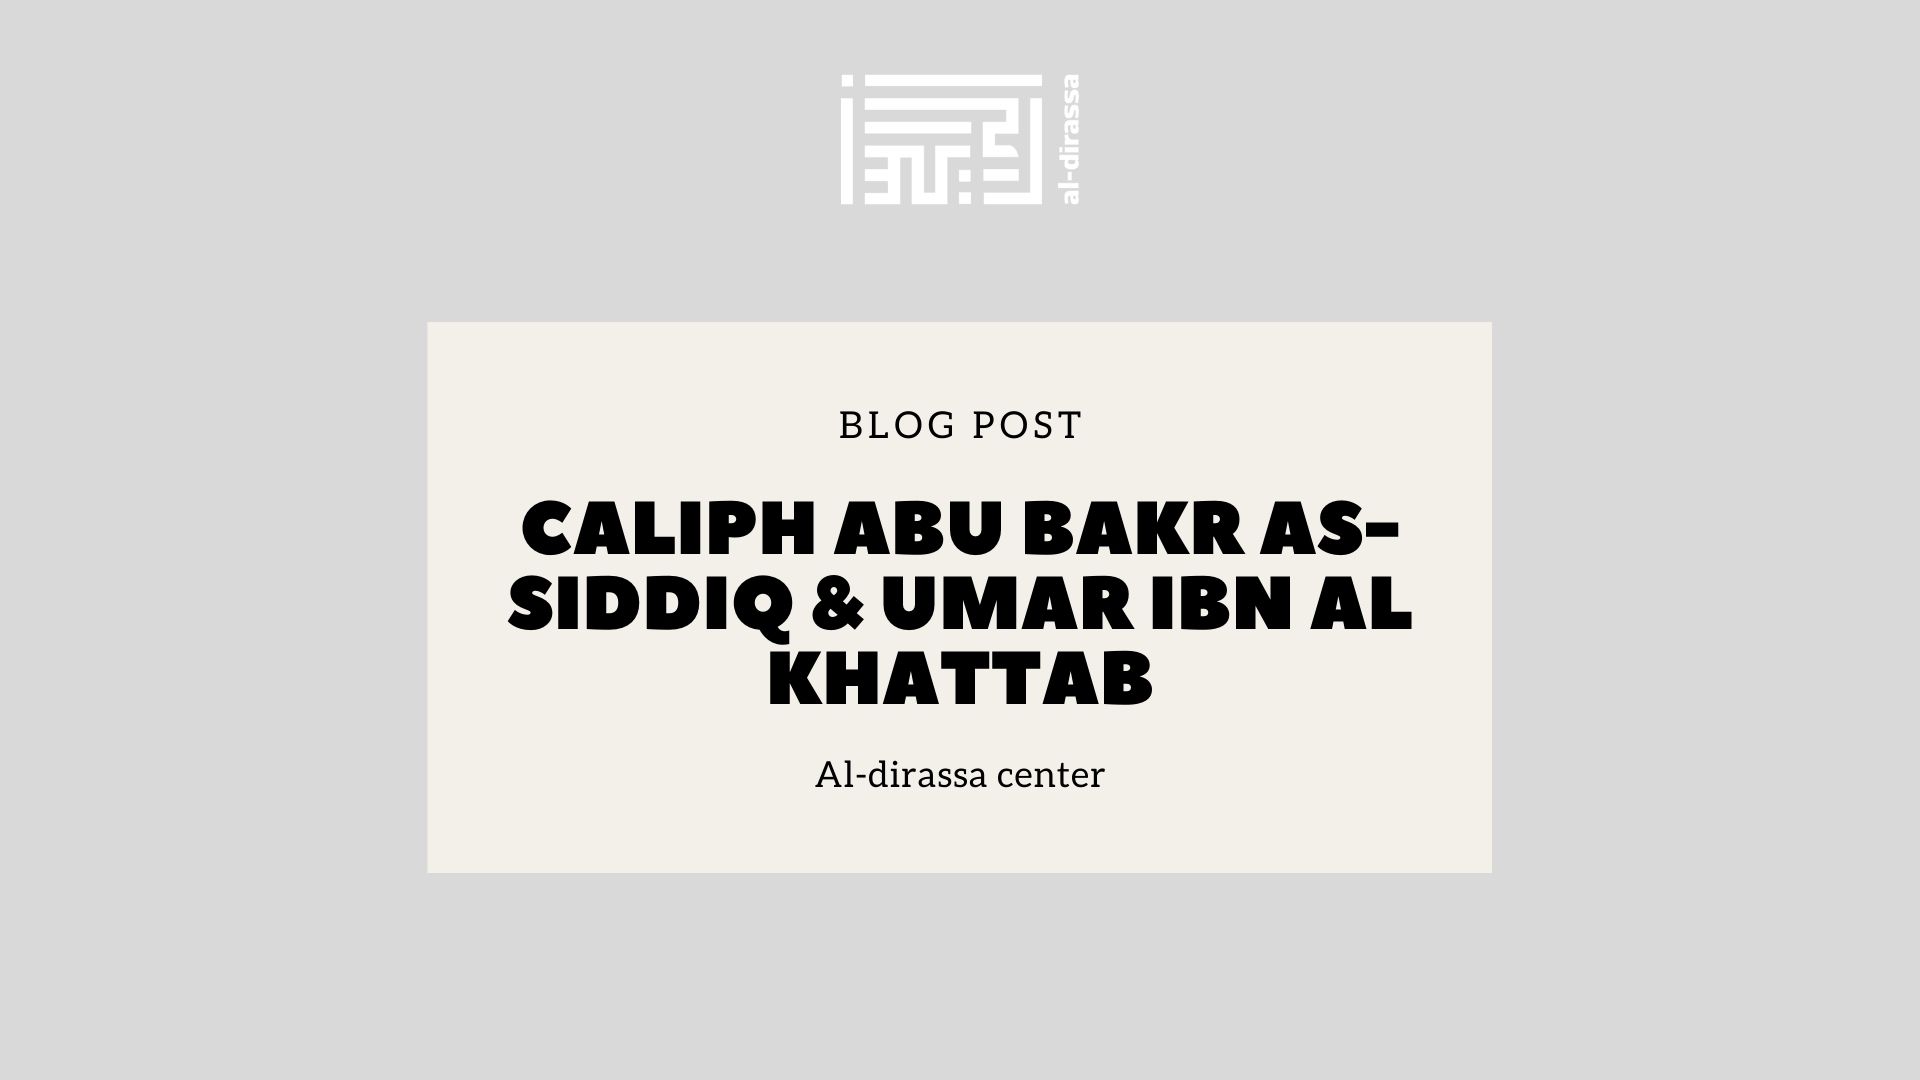 Caliph Abu Bakr As-Siddiq & Umar ibn al Khattab